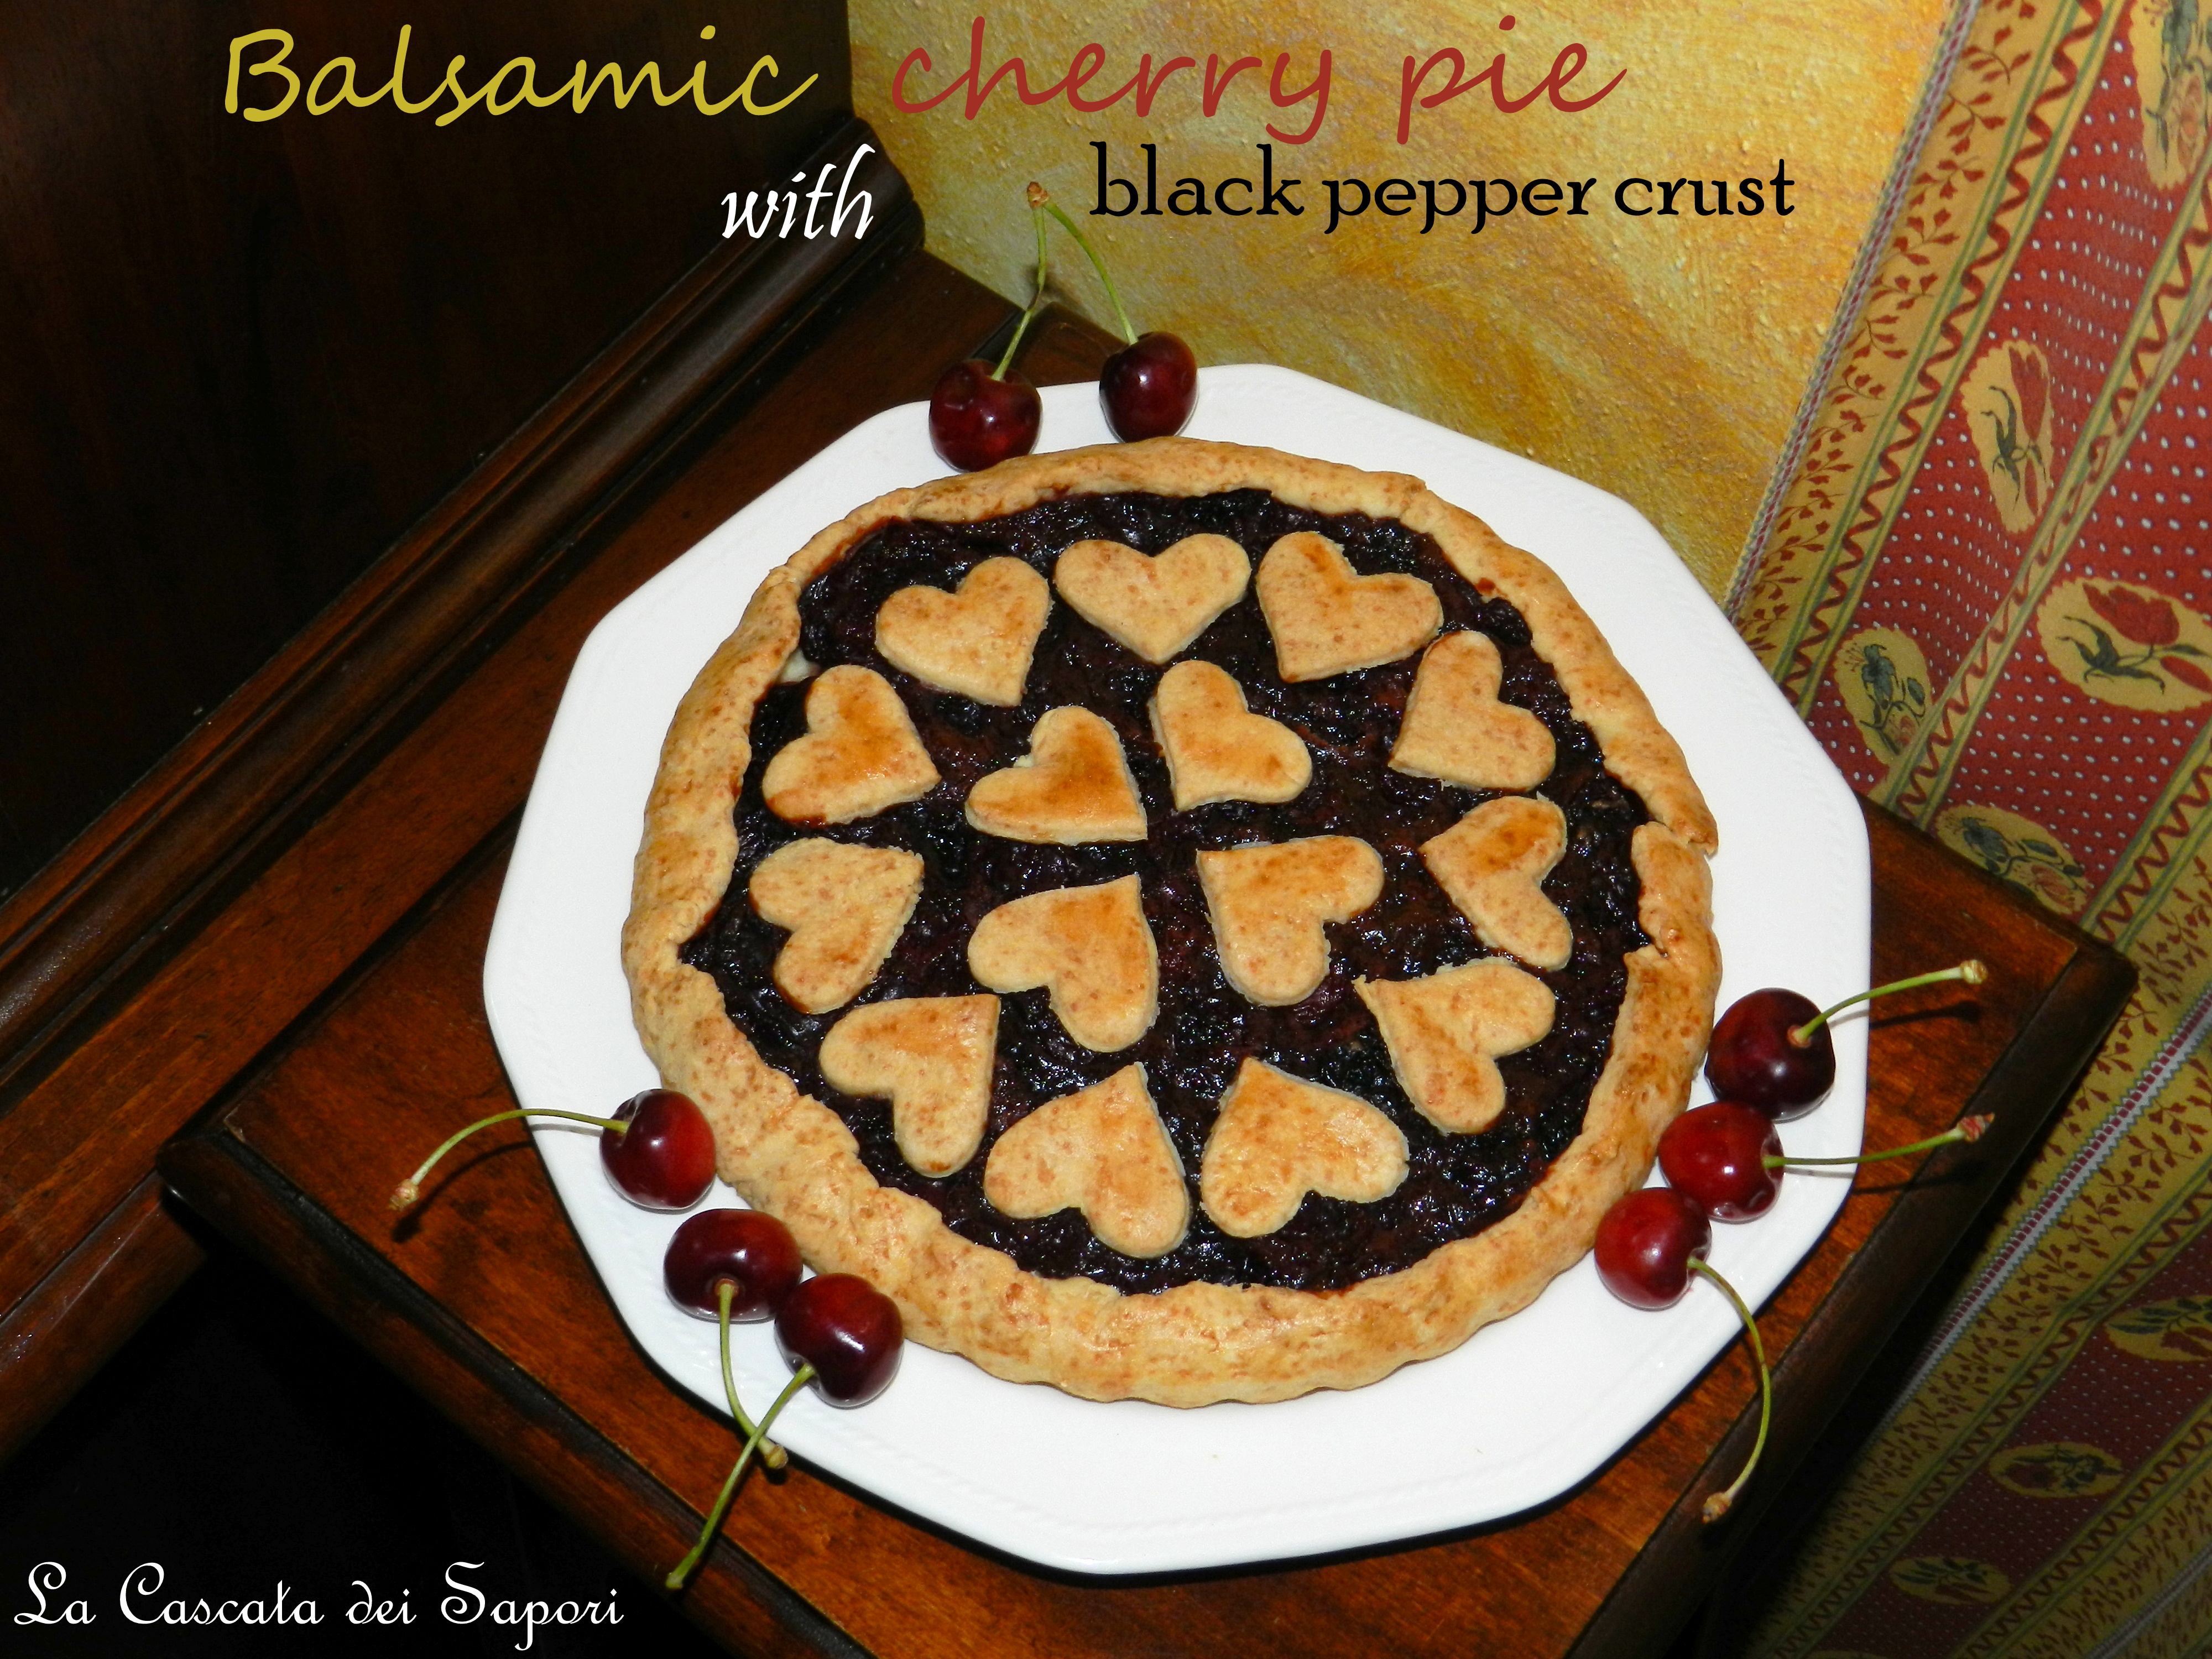 Balsamic cherry pie with black pepper crust